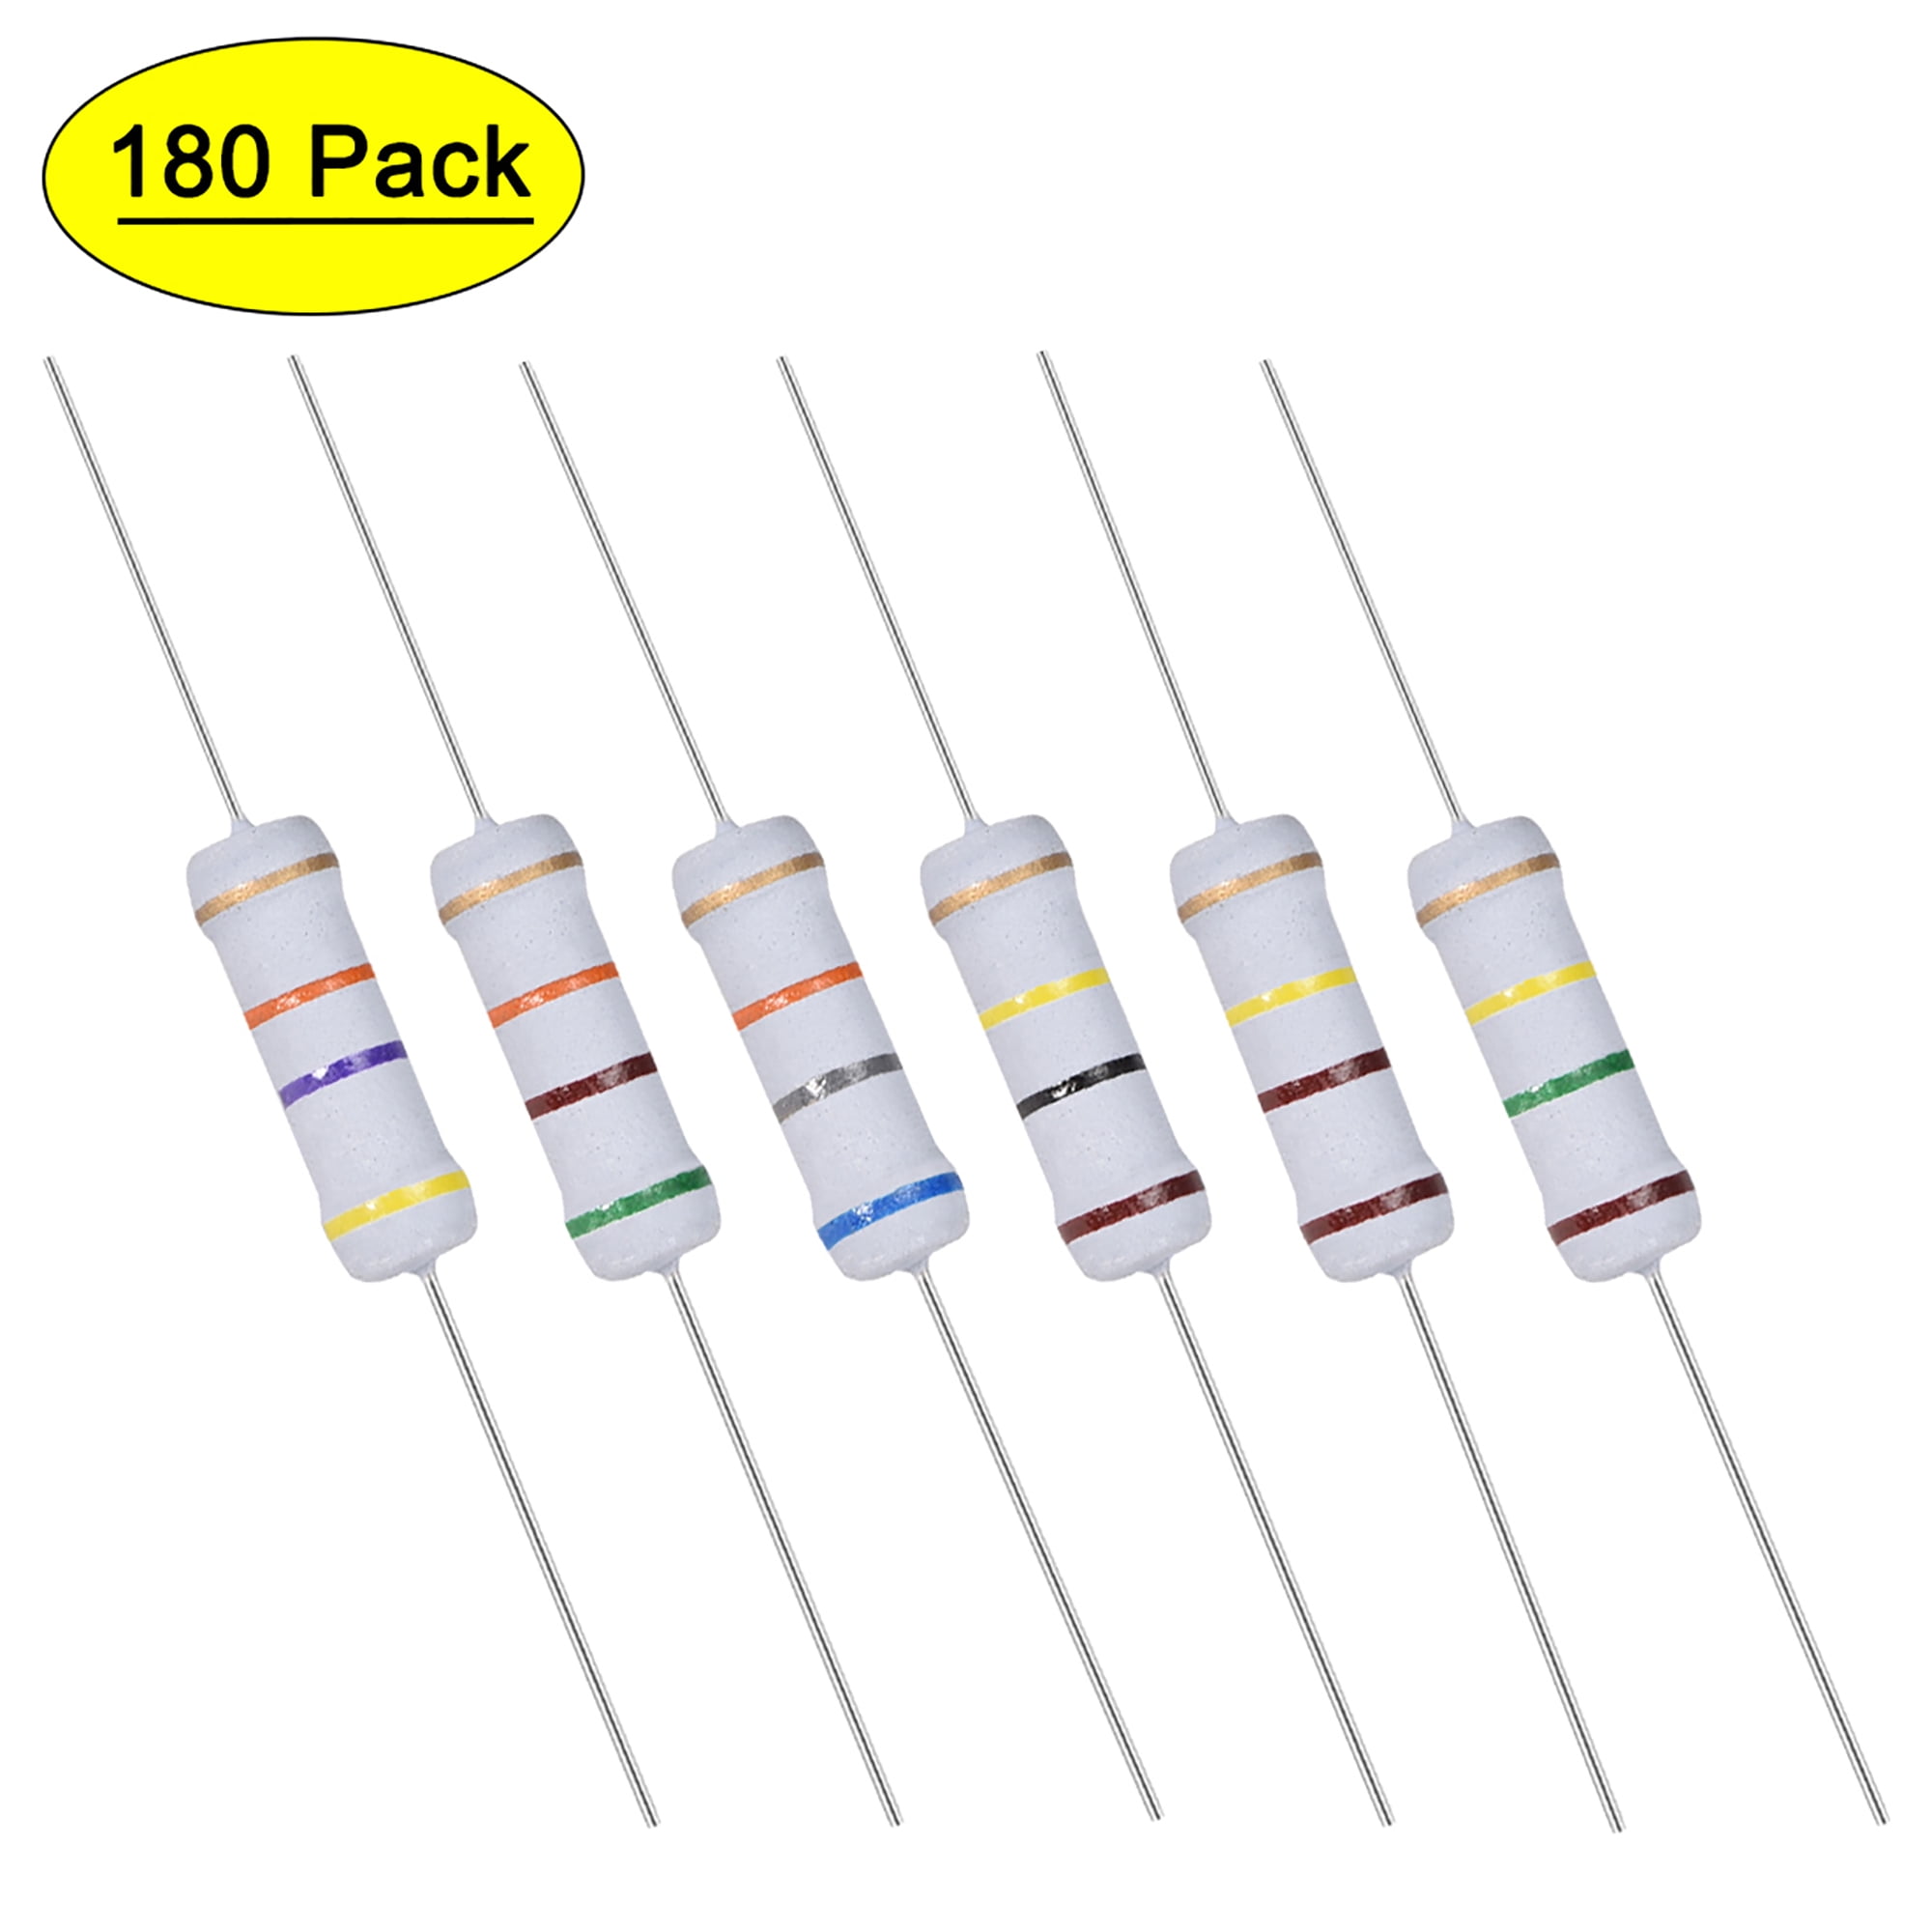 uxcell 30pcs Metal Film Resistors 120K Ohm 2W 1% Tolerances 5 Color Bands 